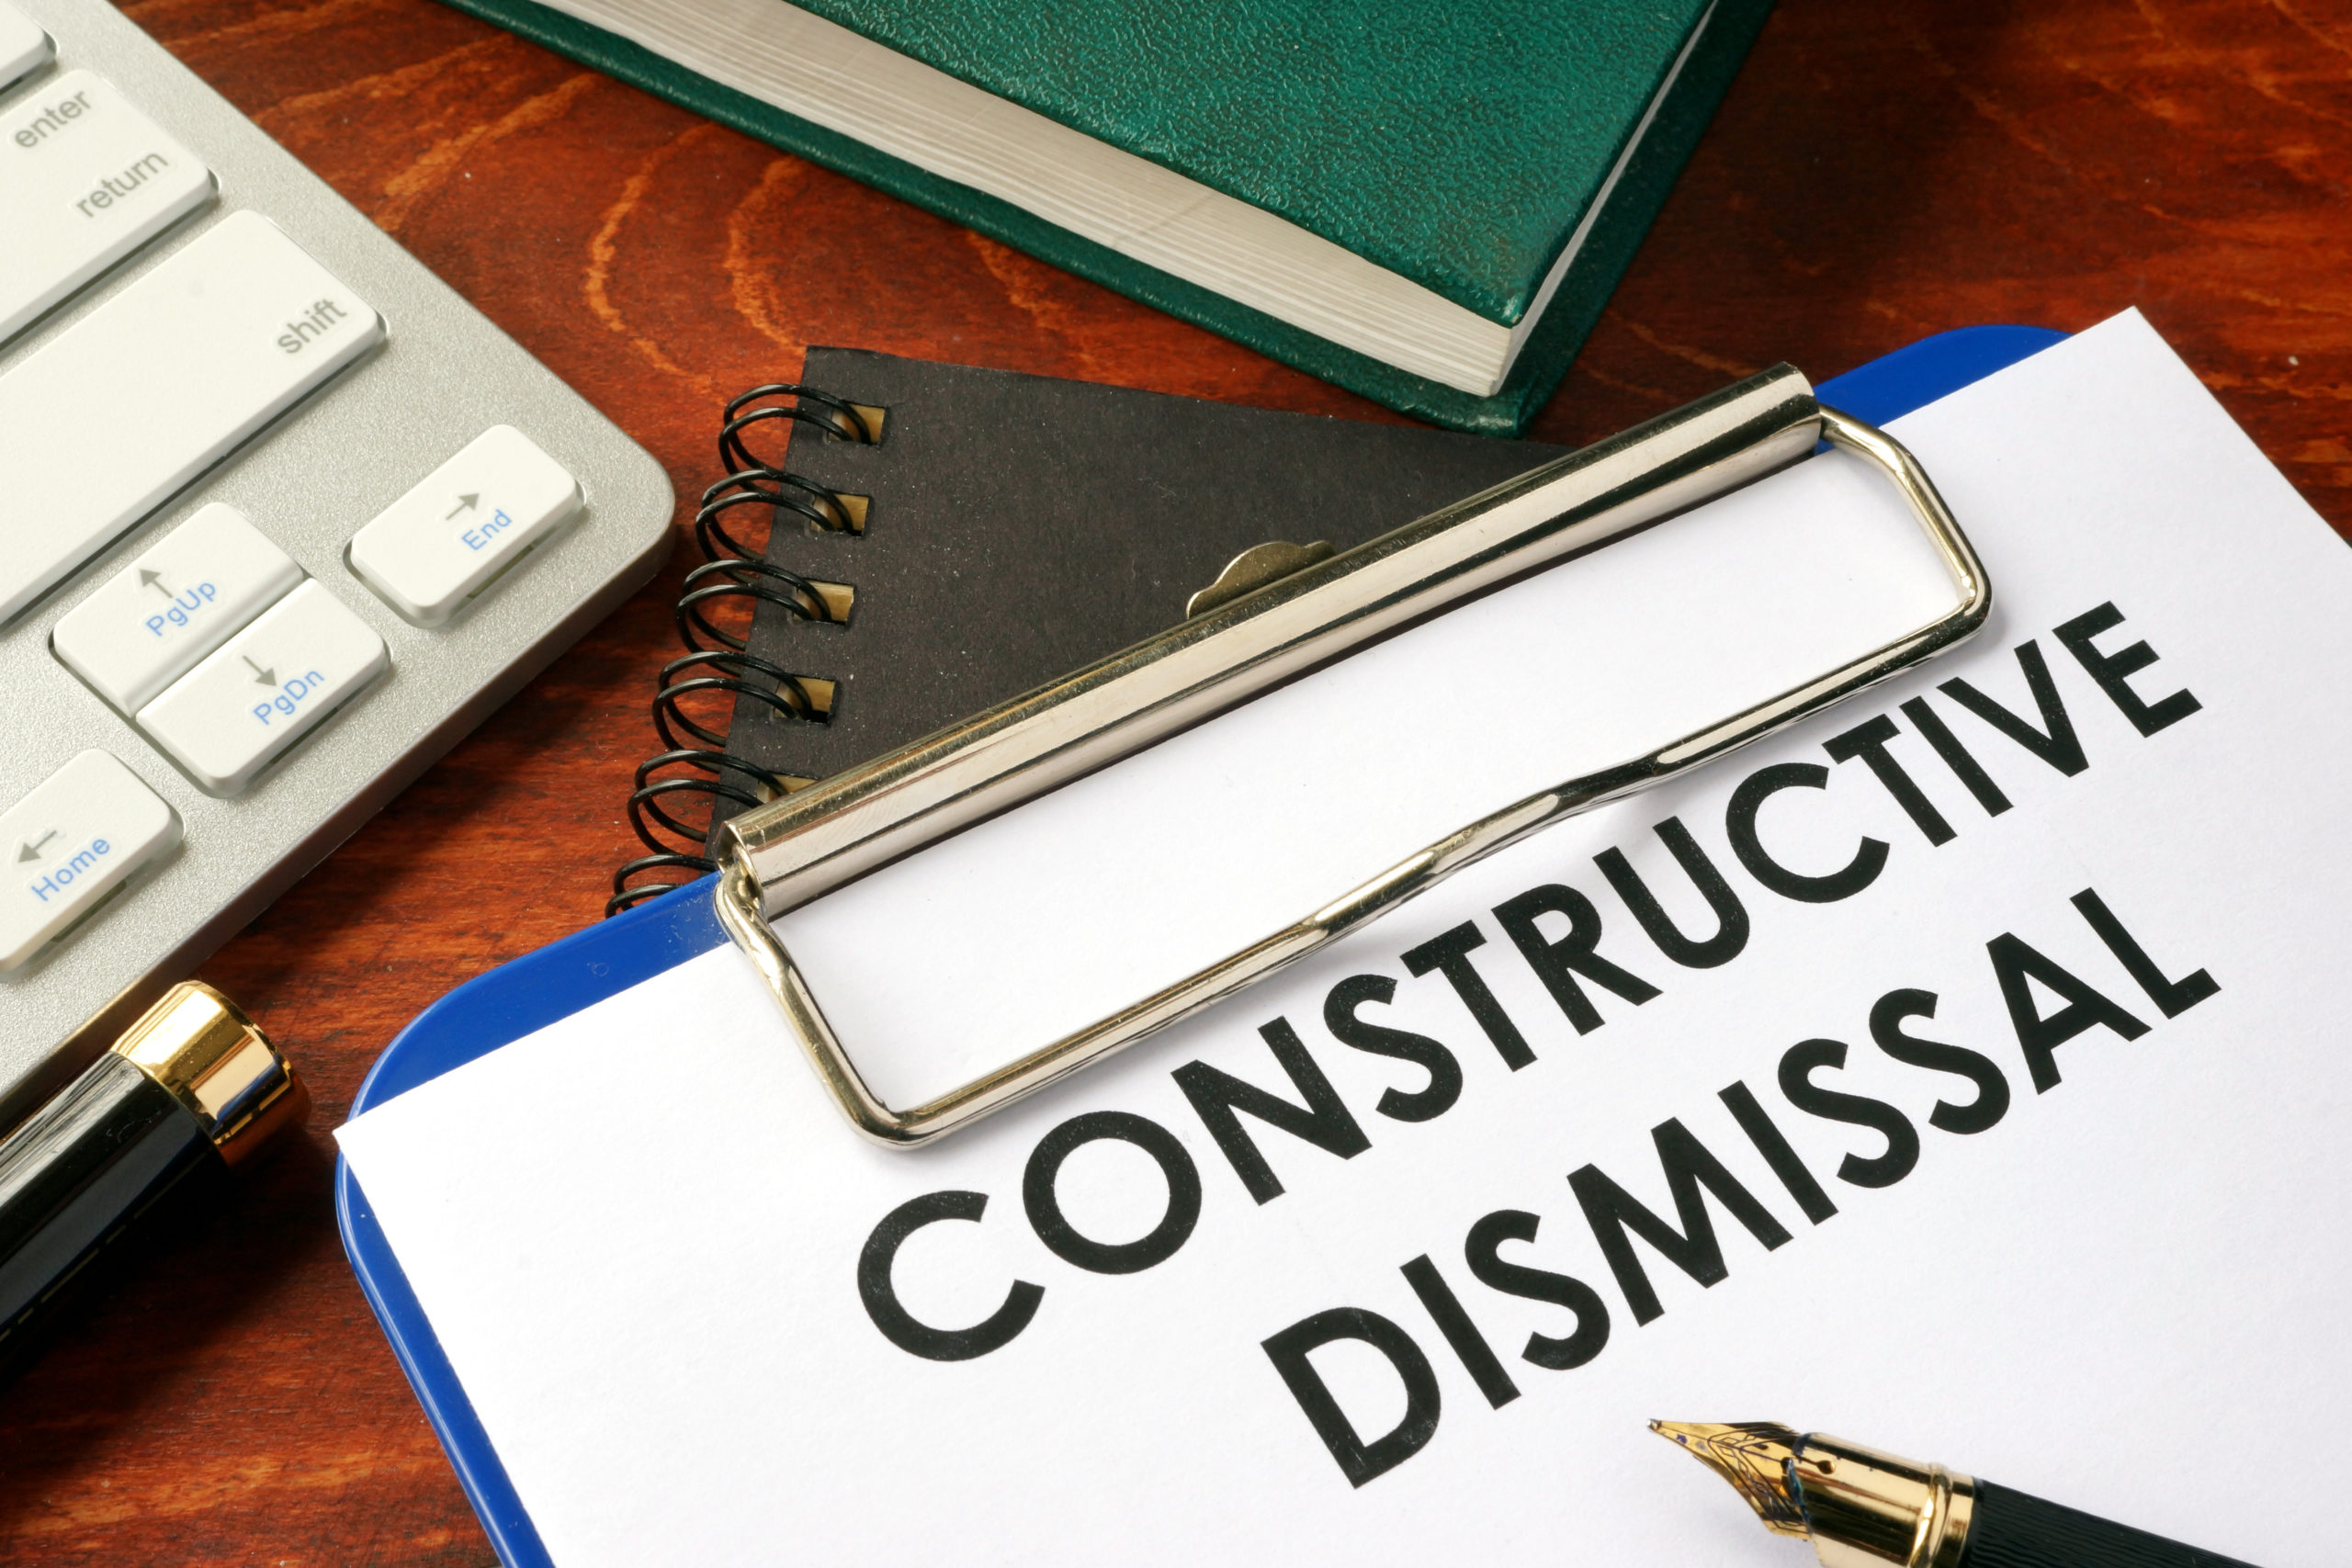 Constructive Dismissal